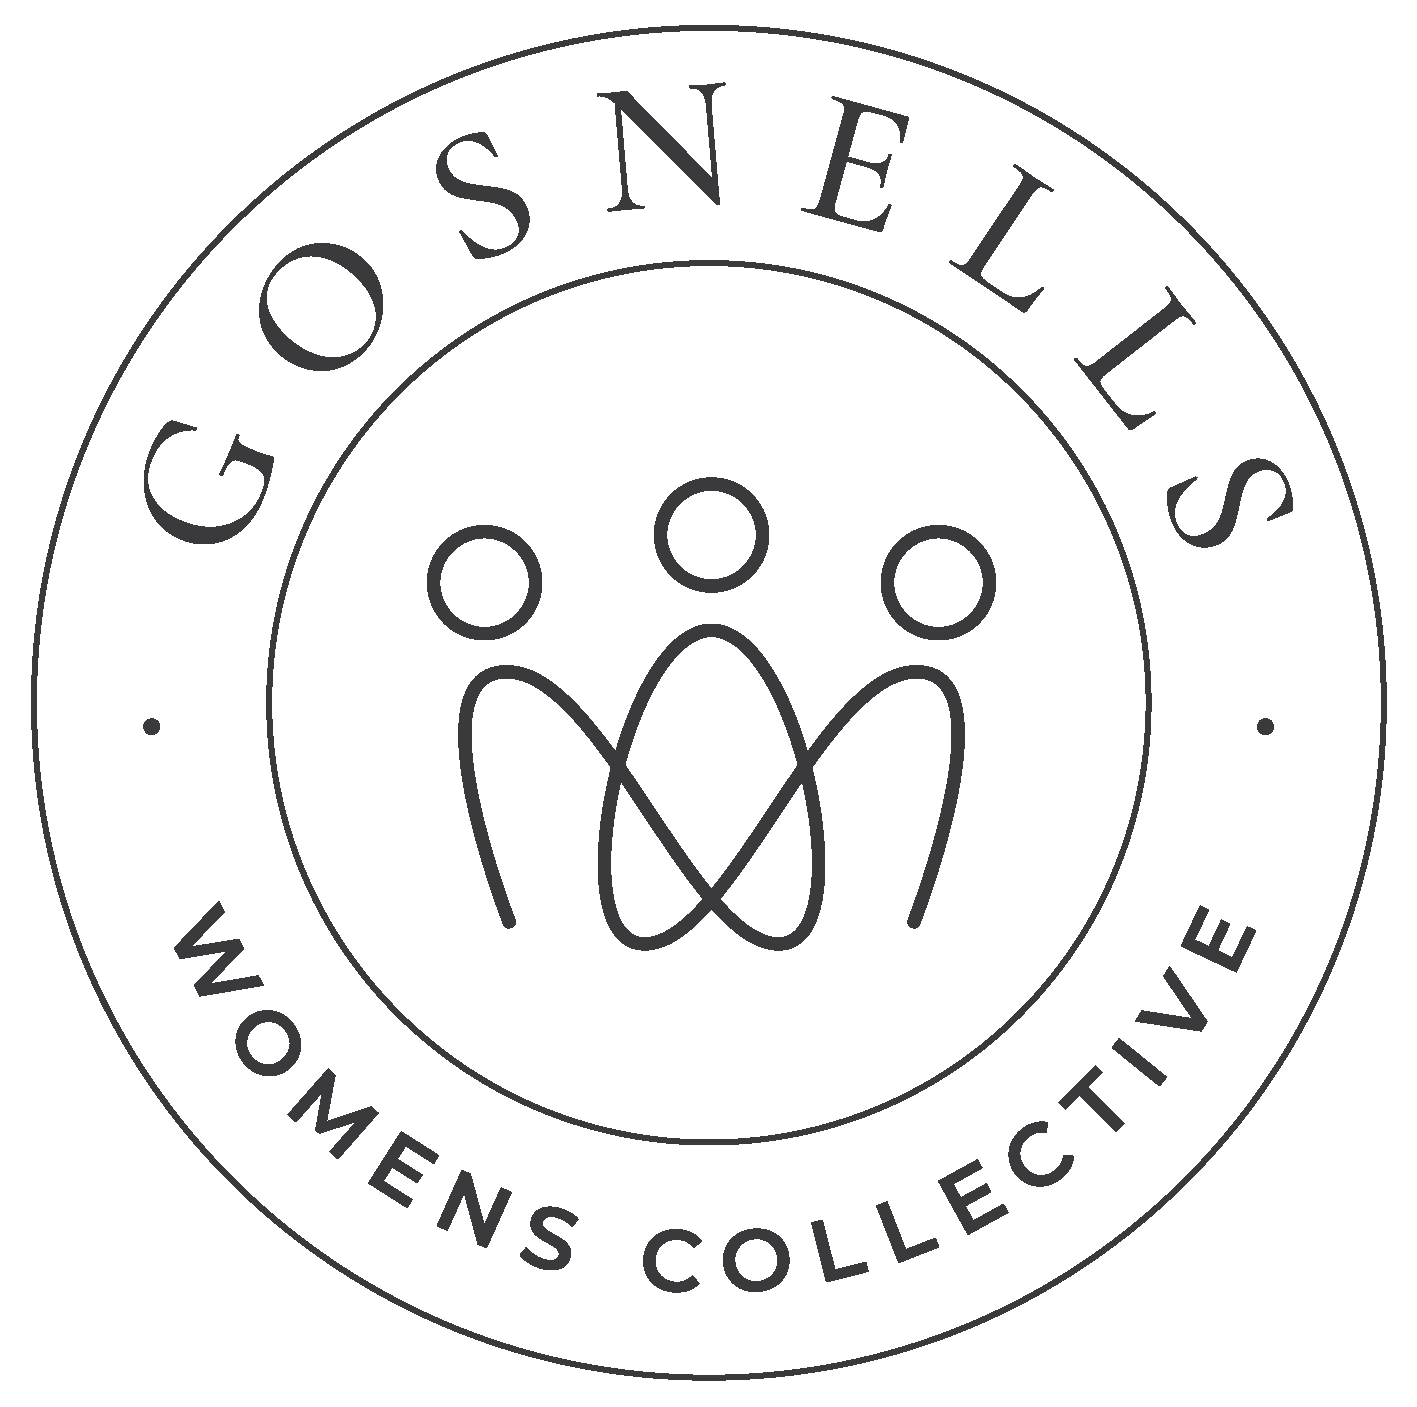 Gosnells Women's Shed logo